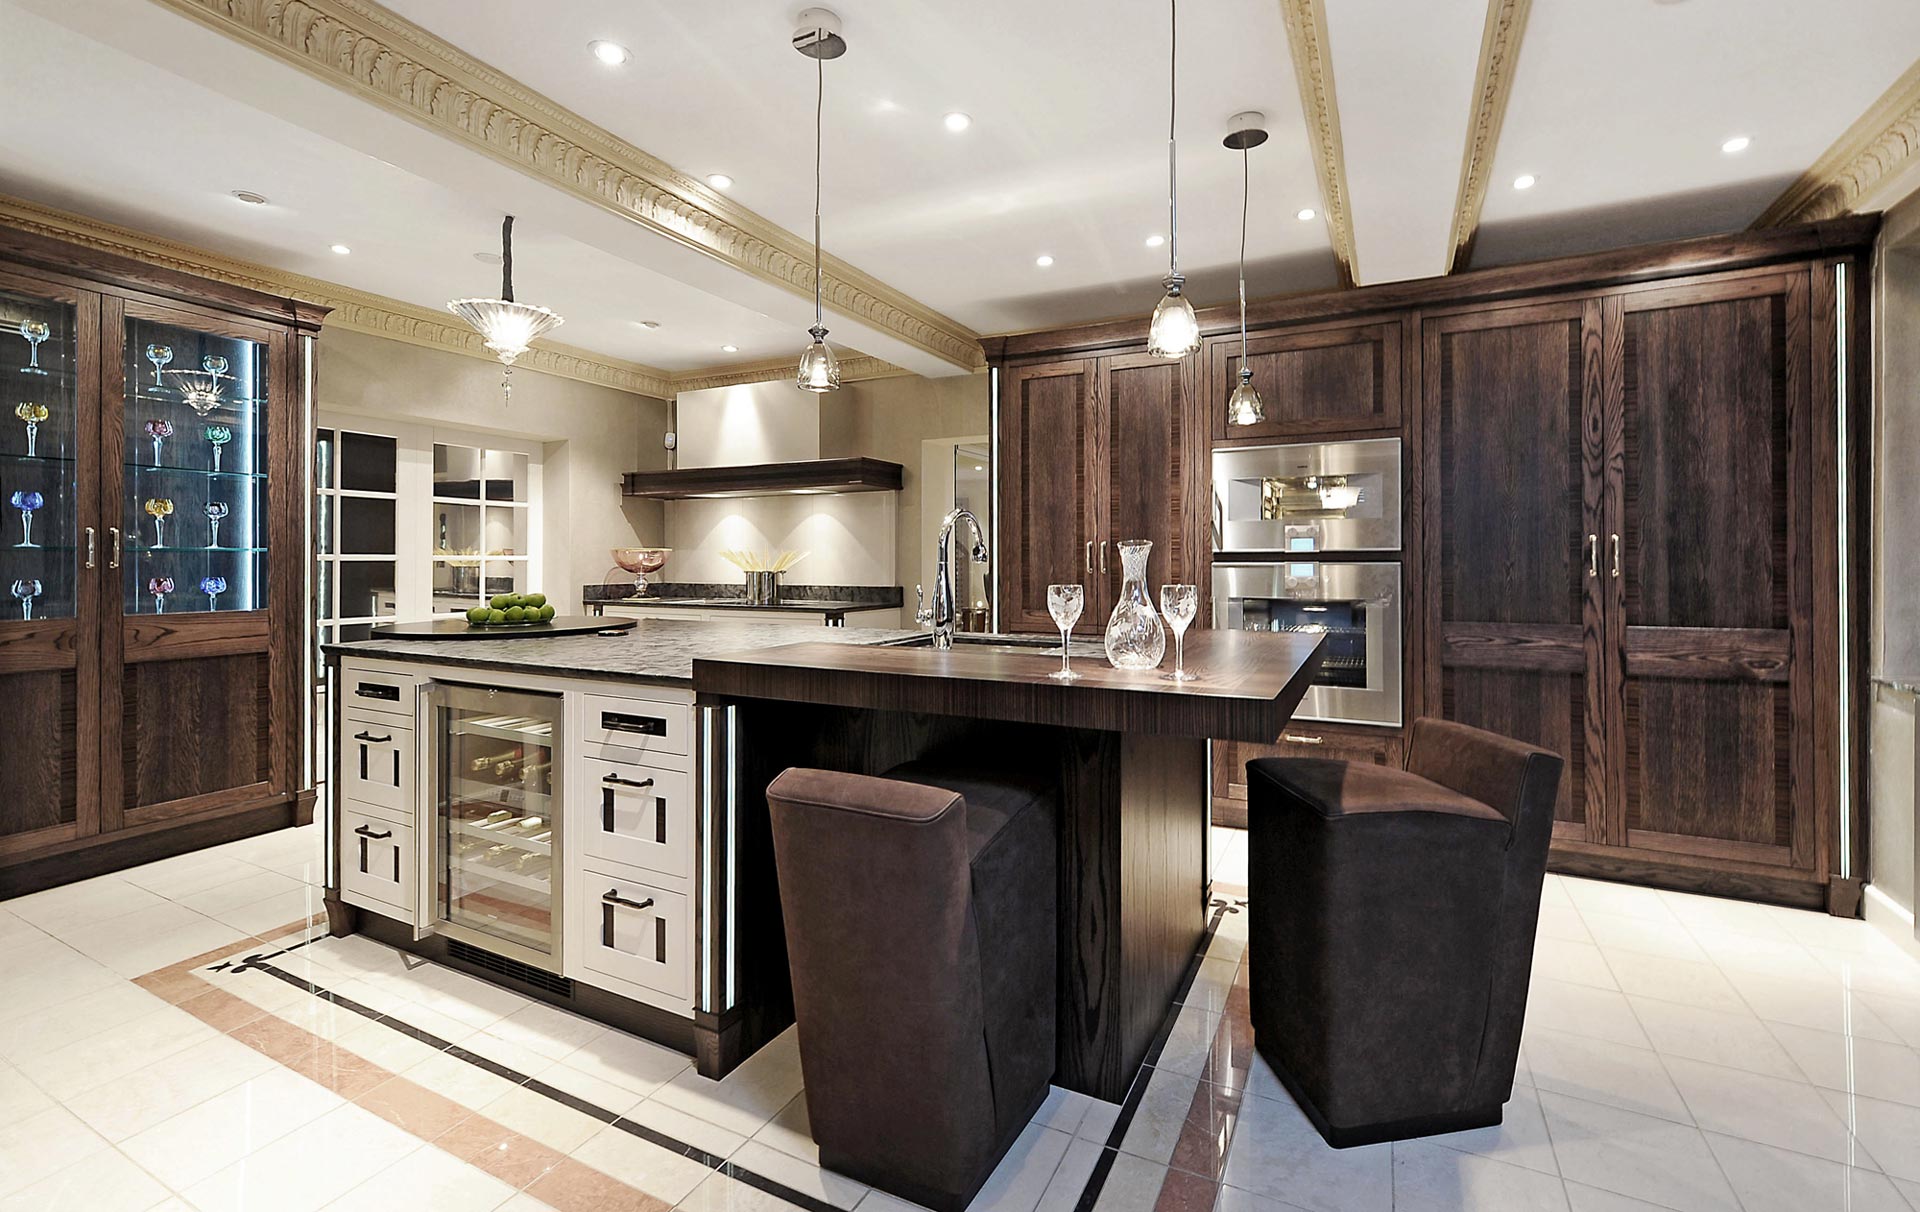 Bespoke Kitchen Design, Hepburn Kitchen by Dream Design. Featuring bespoke cabinetry, granite worktop, breakfast bar, bar stools, Gaggenau appliances and Baccarat lighting.